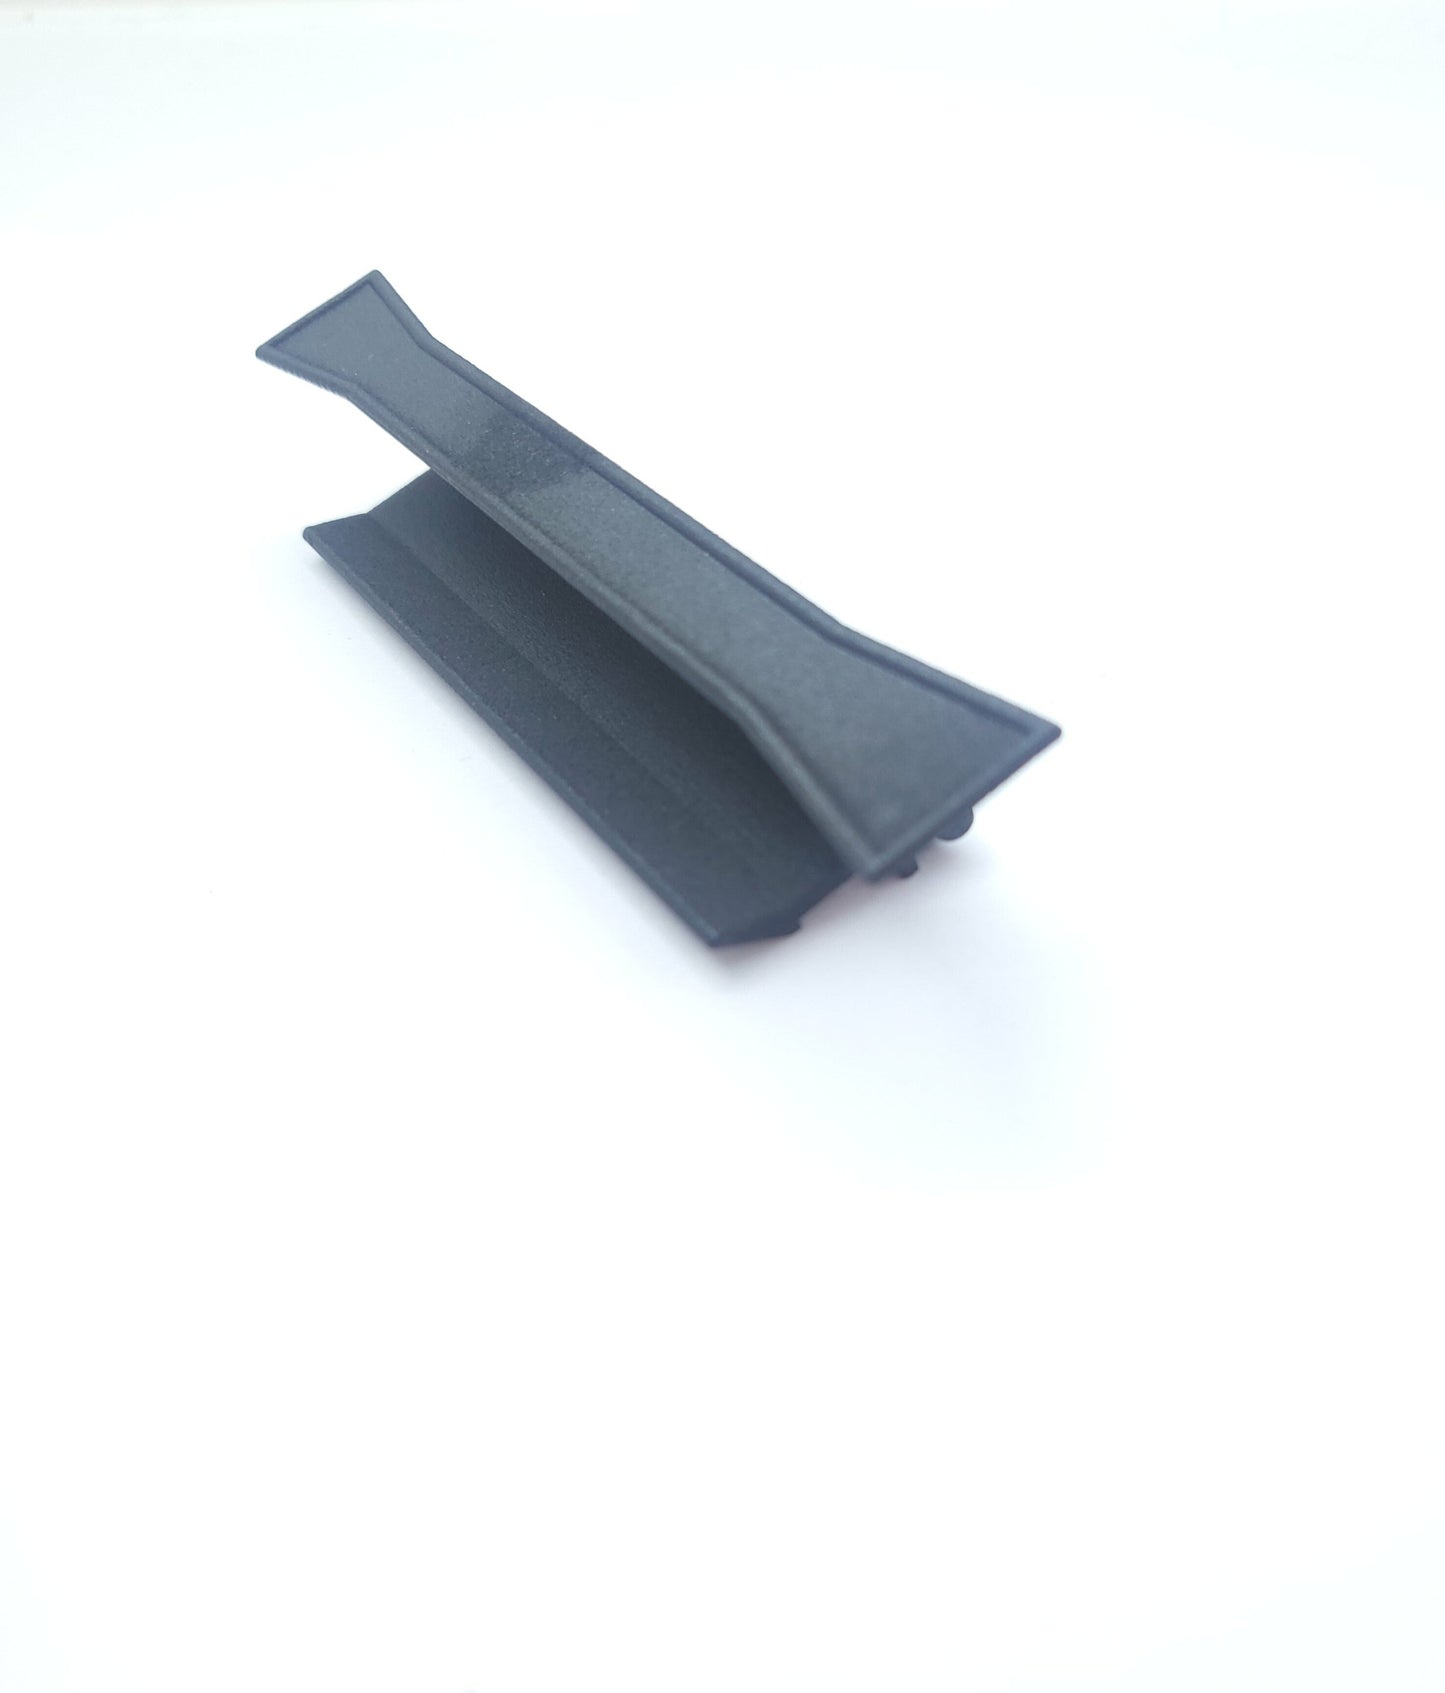 Handle - True-Glide 3D Print- Sold singly